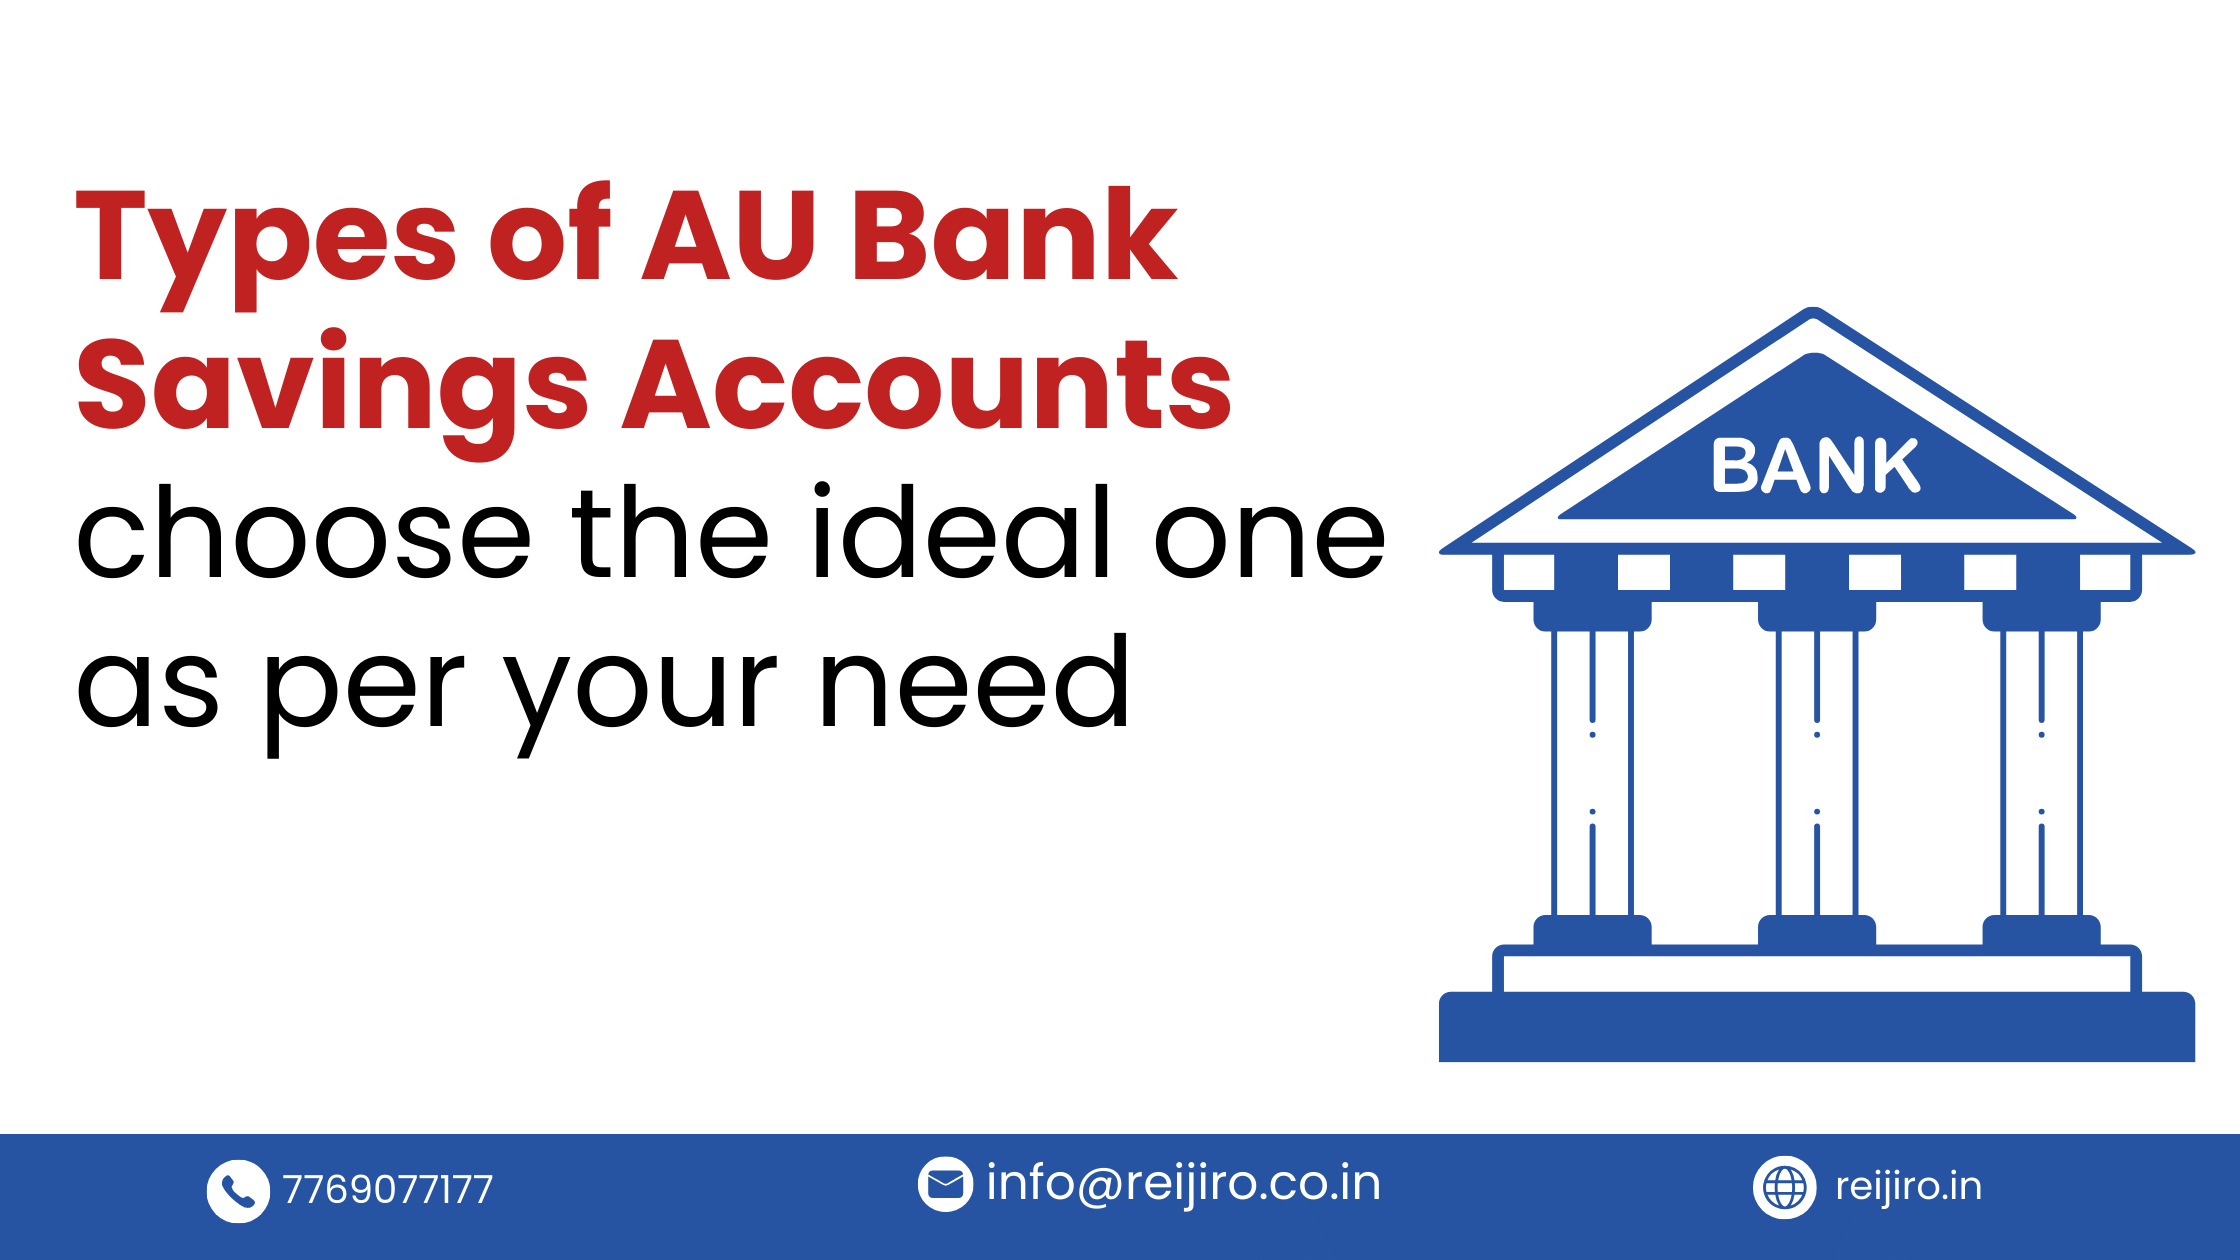 Types of AU Bank Savings Accounts